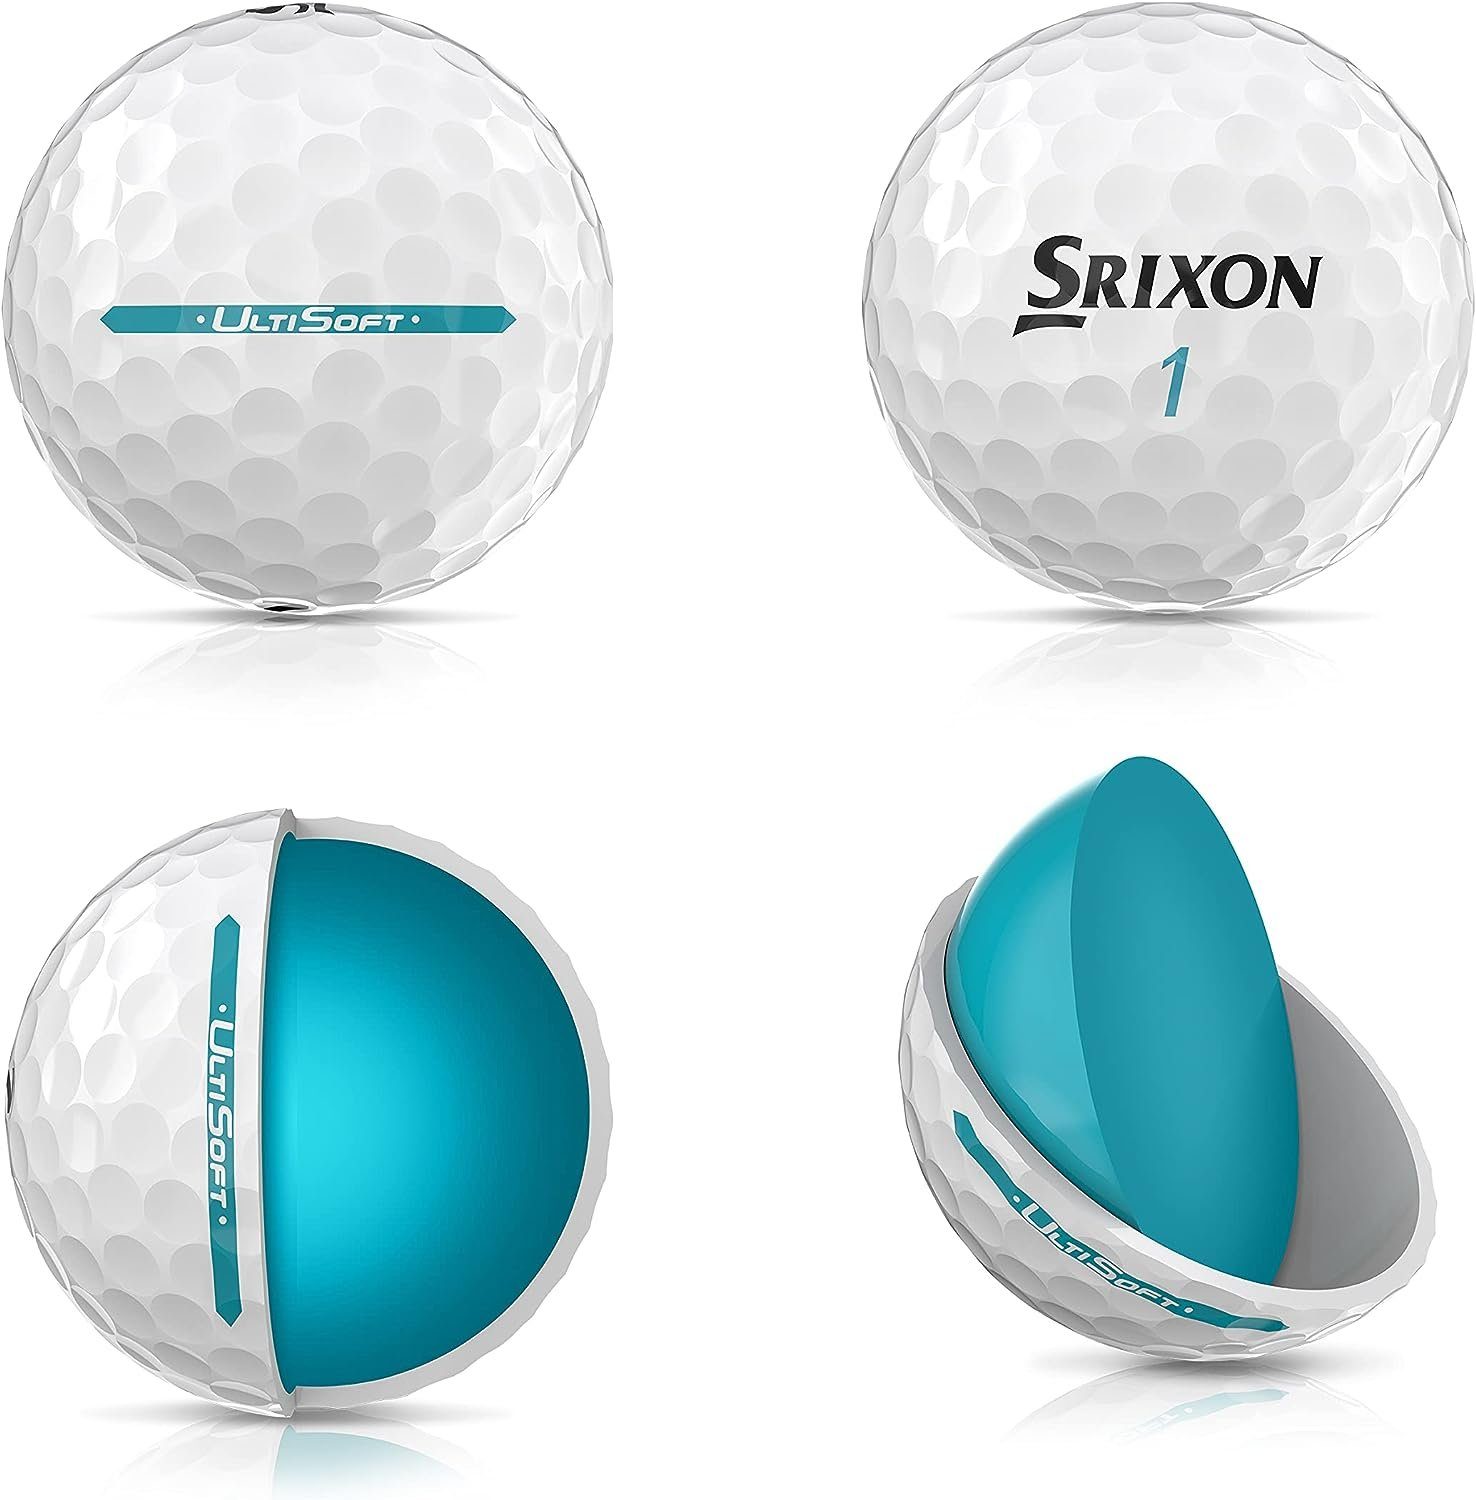 24, Dutzend) Golfbälle (2 / Doppelpack Dutzend UltiSoft Aktion: Golfball 2 DoppelPack Srixon Srixon PureWhite